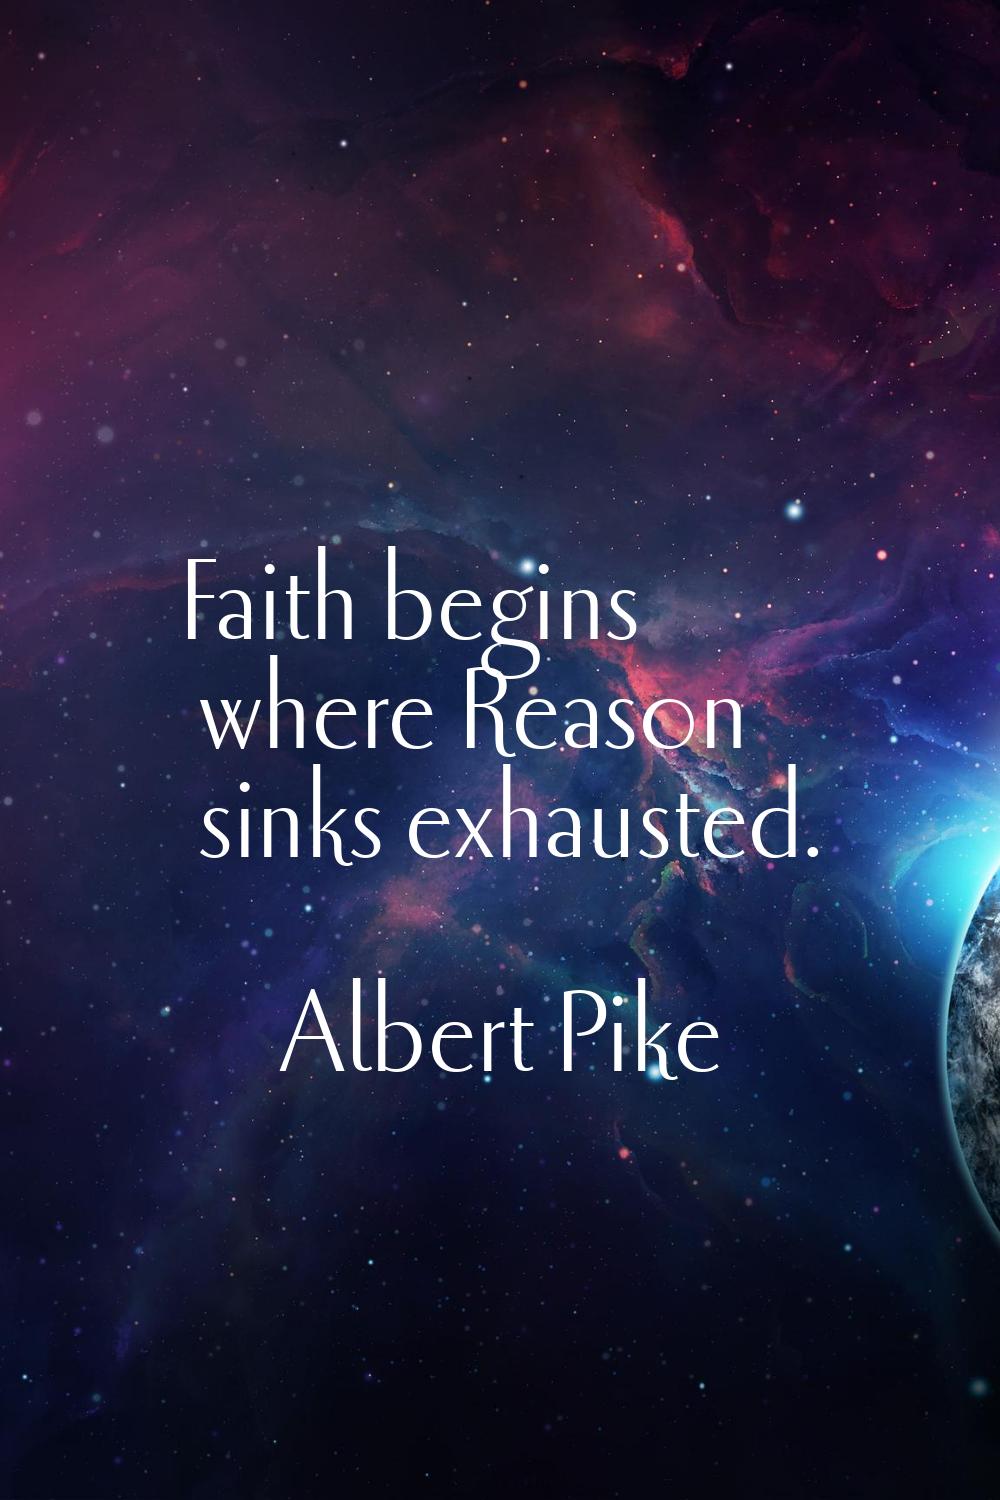 Faith begins where Reason sinks exhausted.